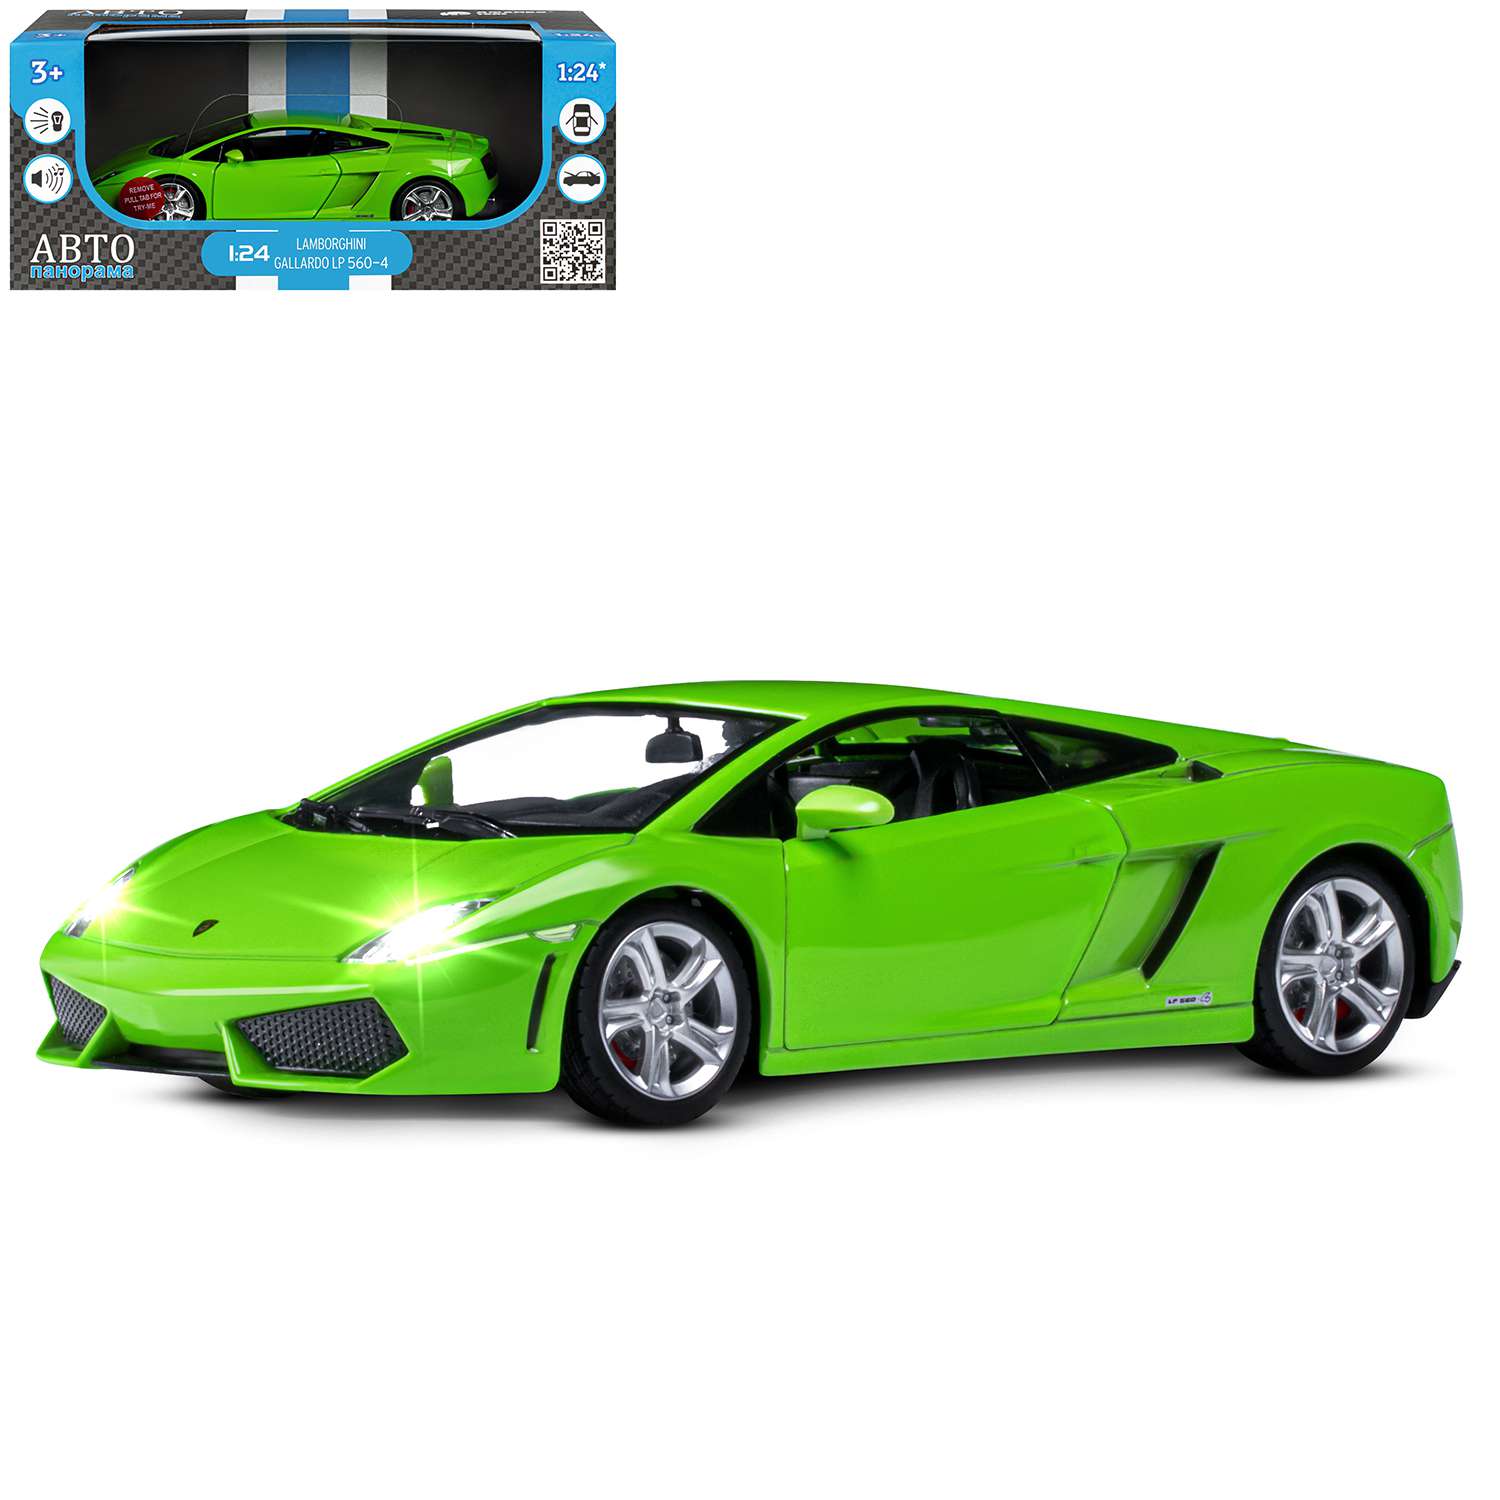 Машина JB1251382 Lamborghini Gallardo LP560-4 металл 1:24 зеленый свет, звук ТМ Автопанорама - Челябинск 